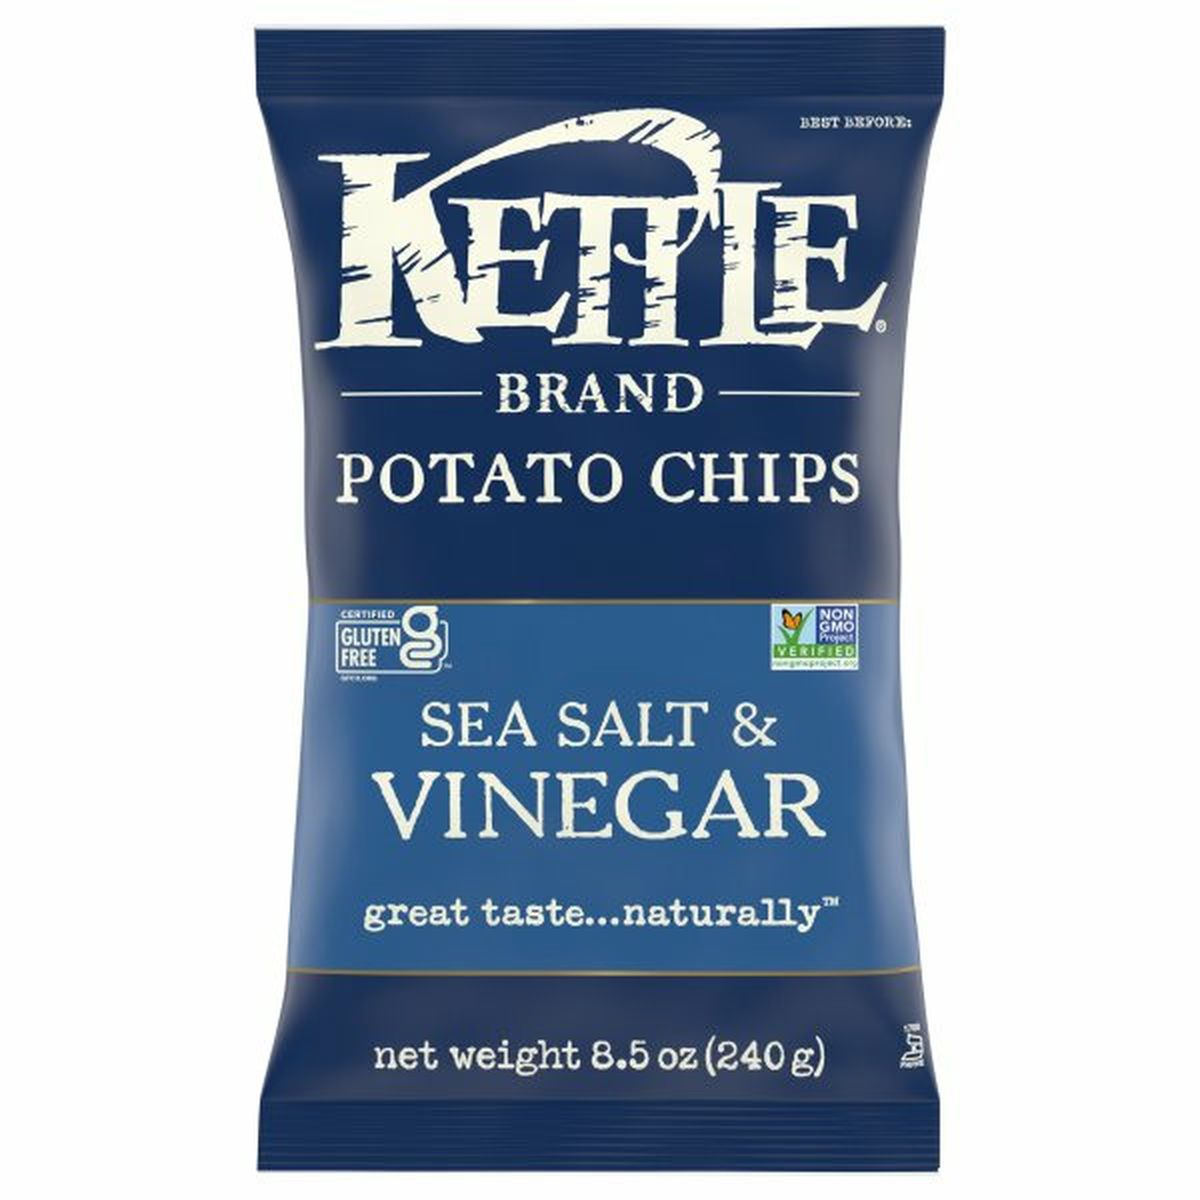 Calories in Kettle Brands Potato Chips, Sea Salt & Vinegar